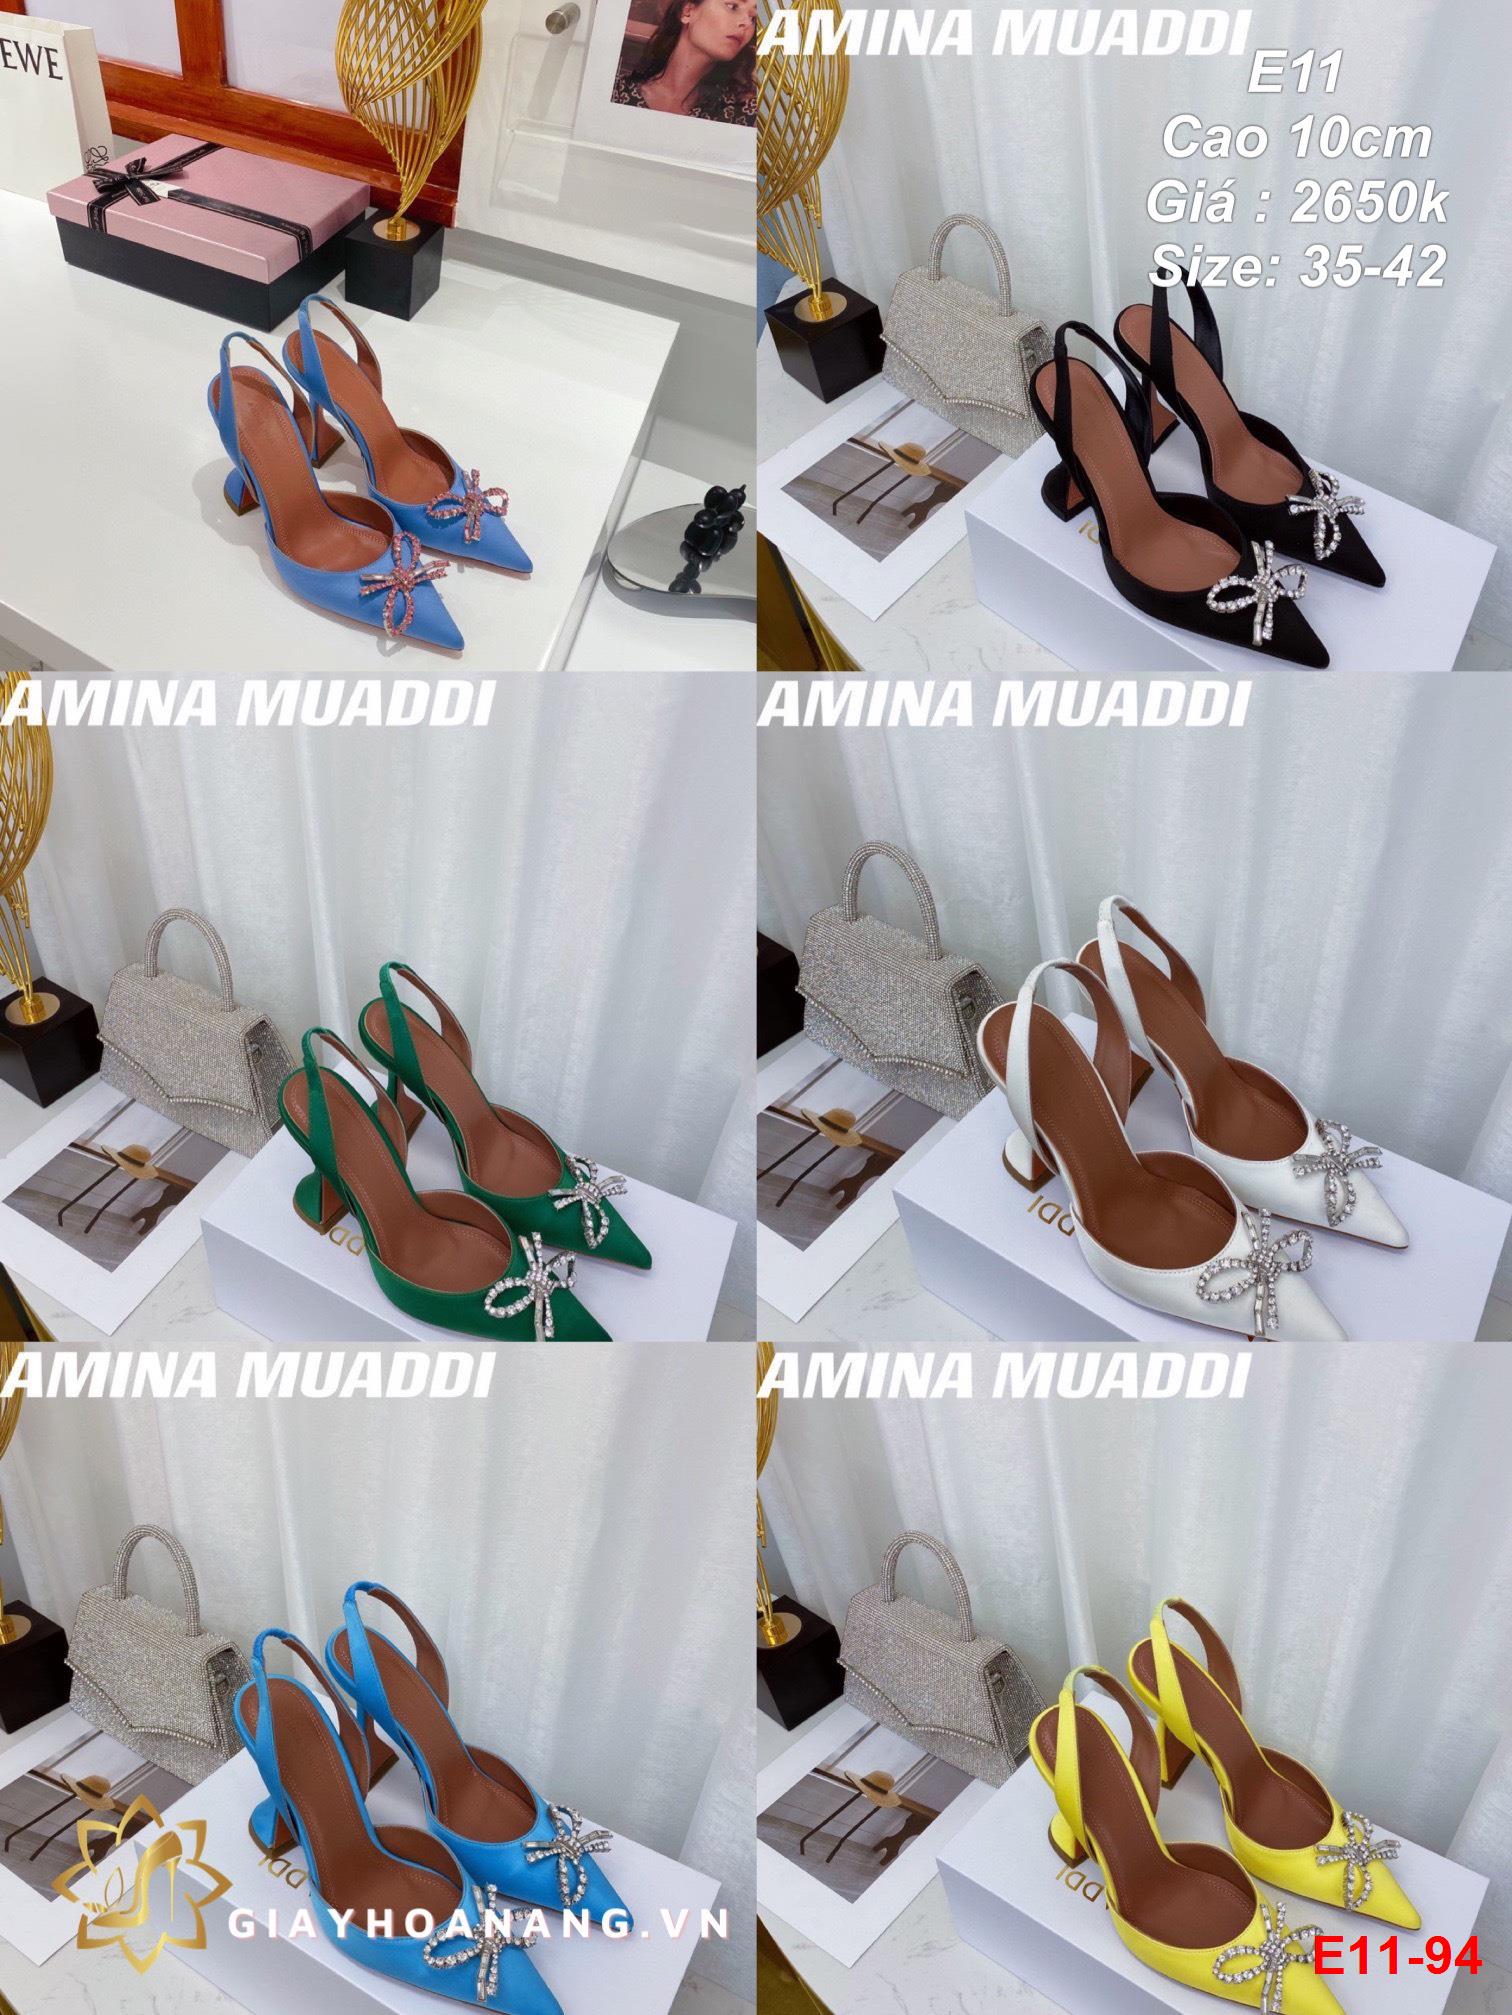 E11-94 Amina Muaddi sandal cao 10cm siêu cấp